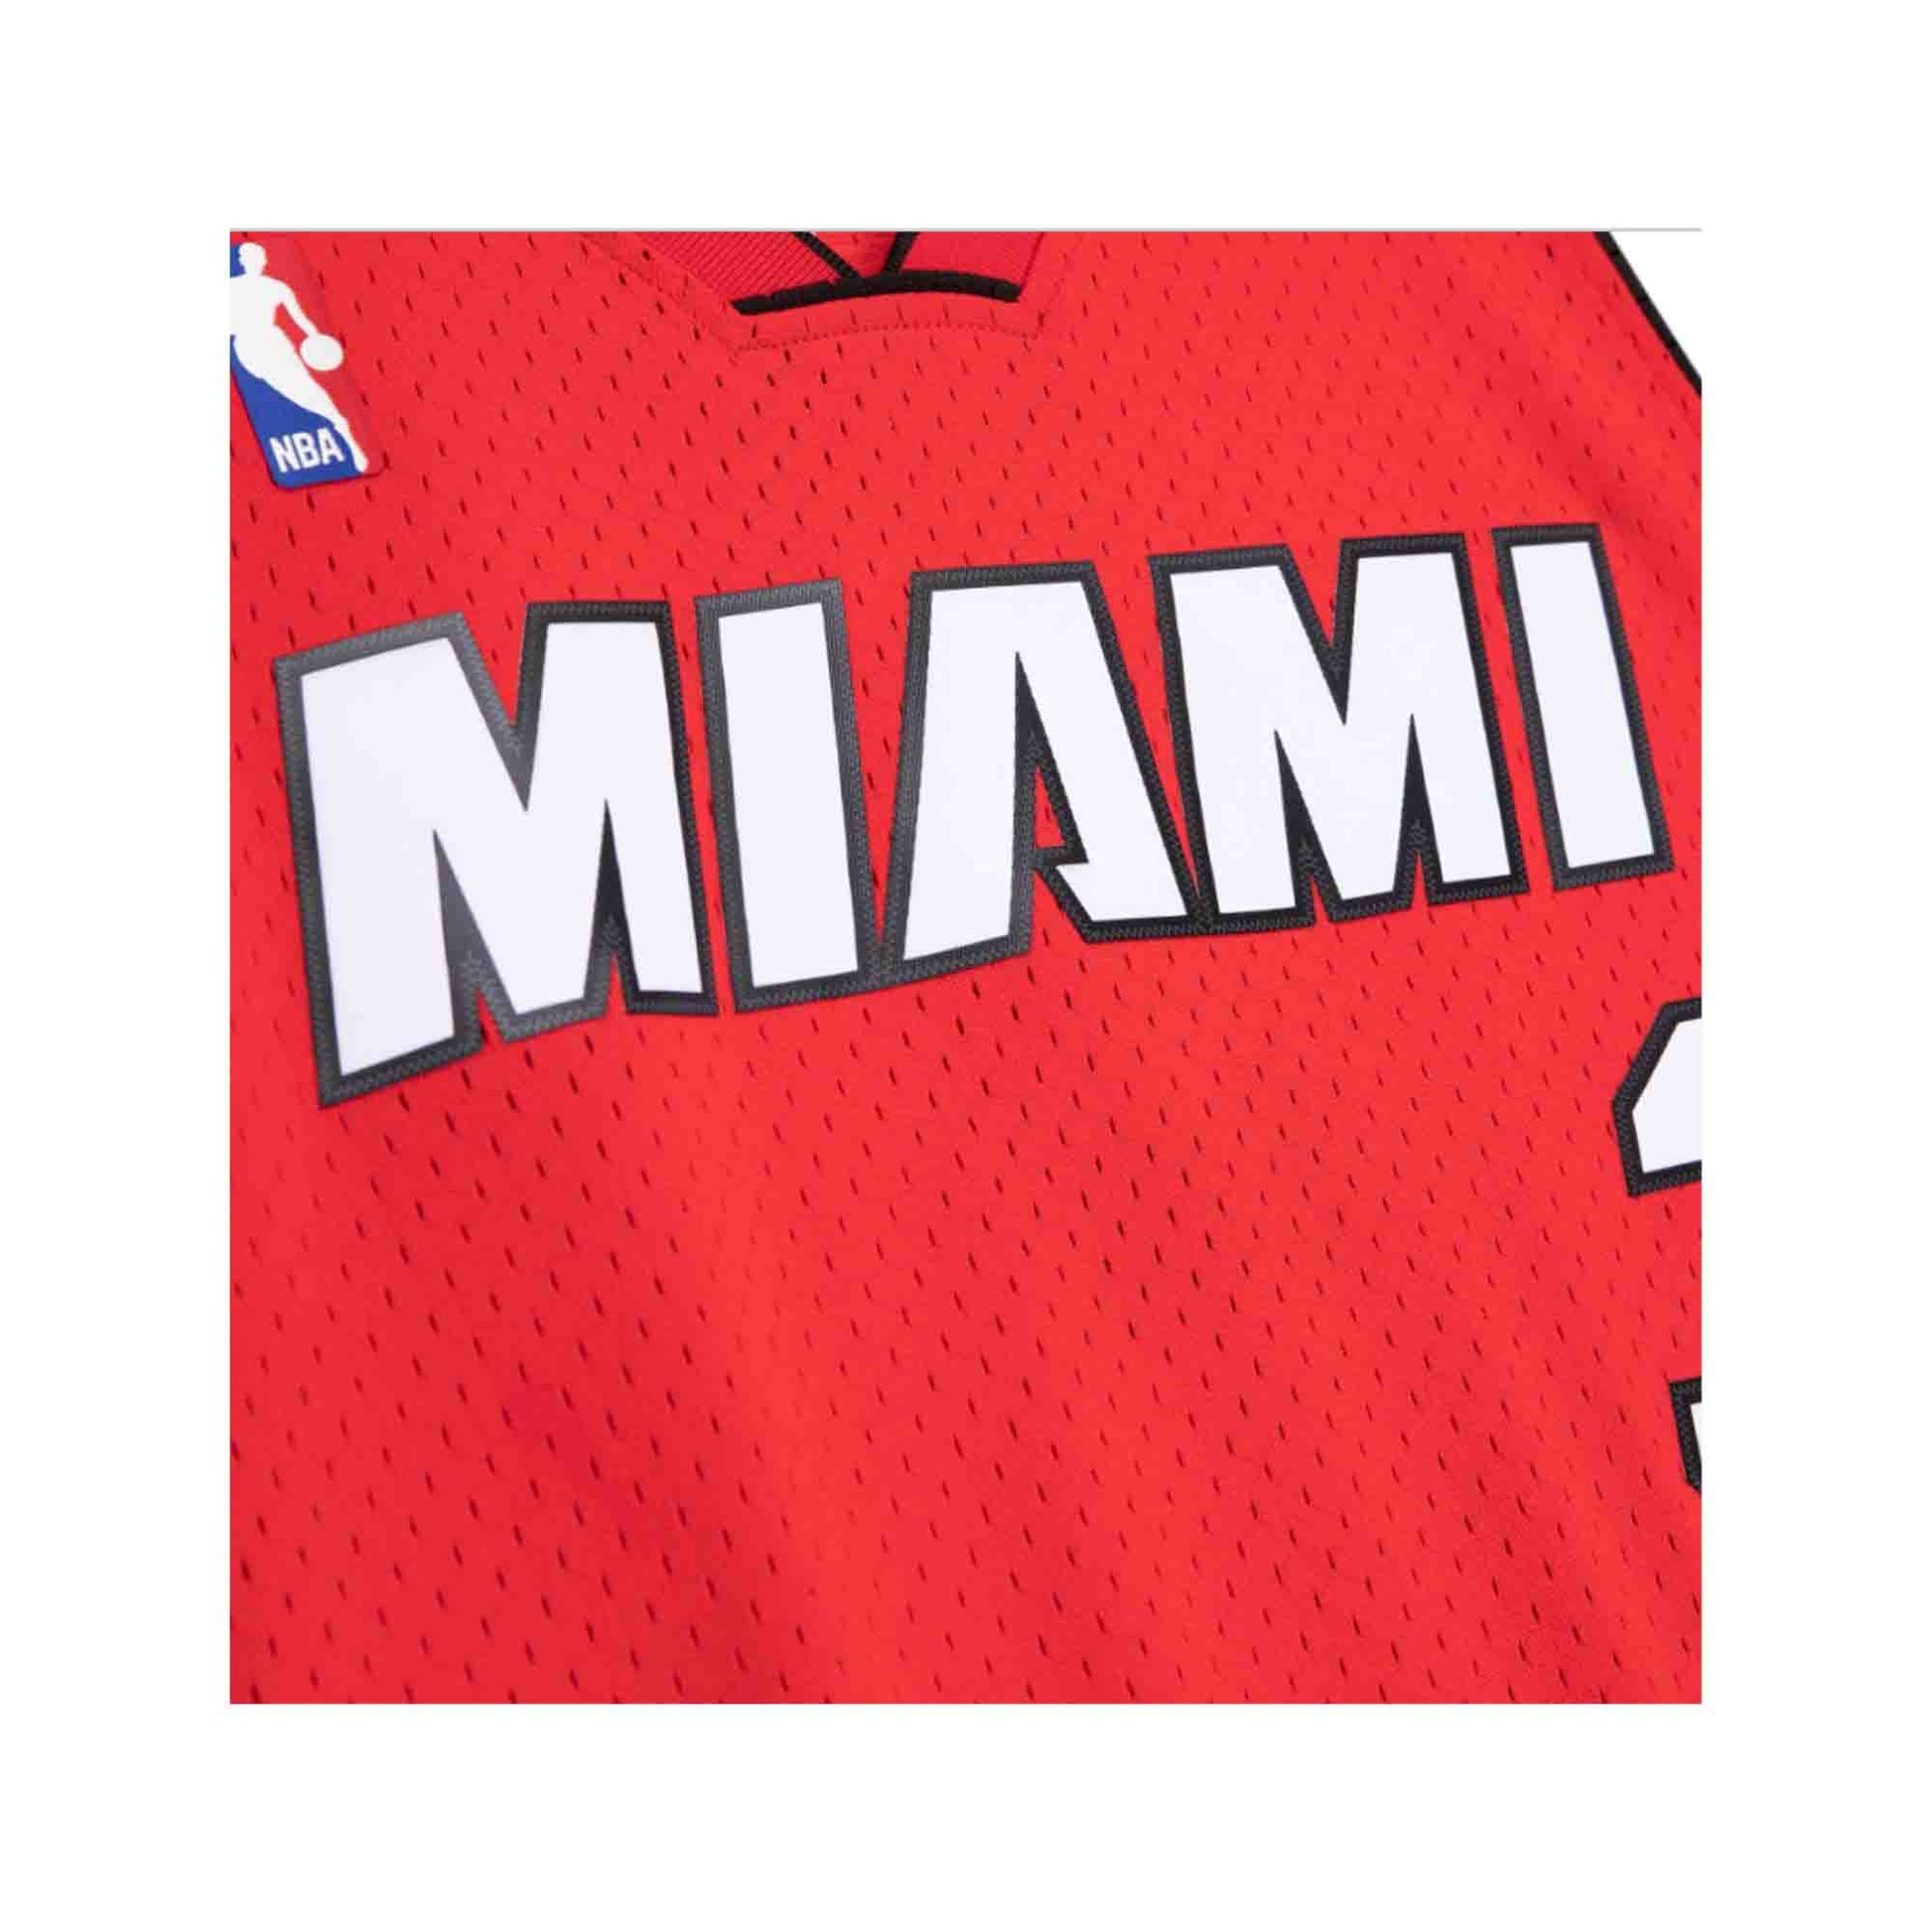 Vintage Miami Heat Ray Allen 34 Jersey Adidas Size Medium M -  Denmark